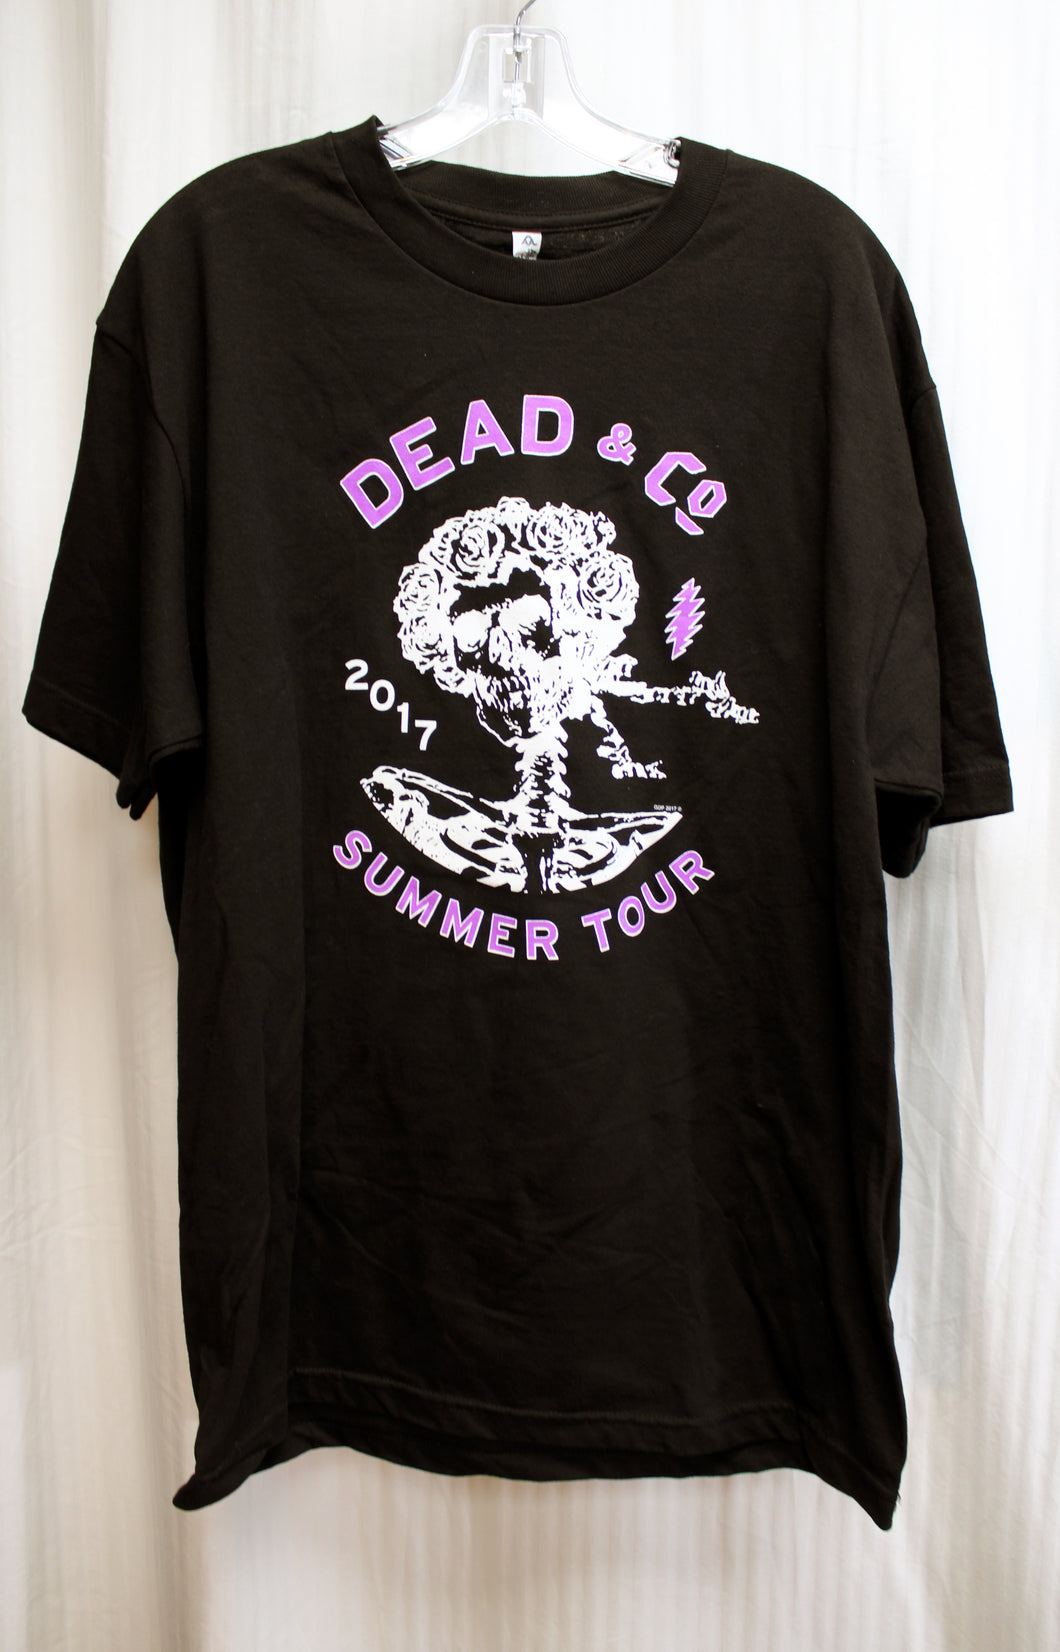 Dead & Co. 2017 Summer Tour 2-sided Black t-Shirt - Size L